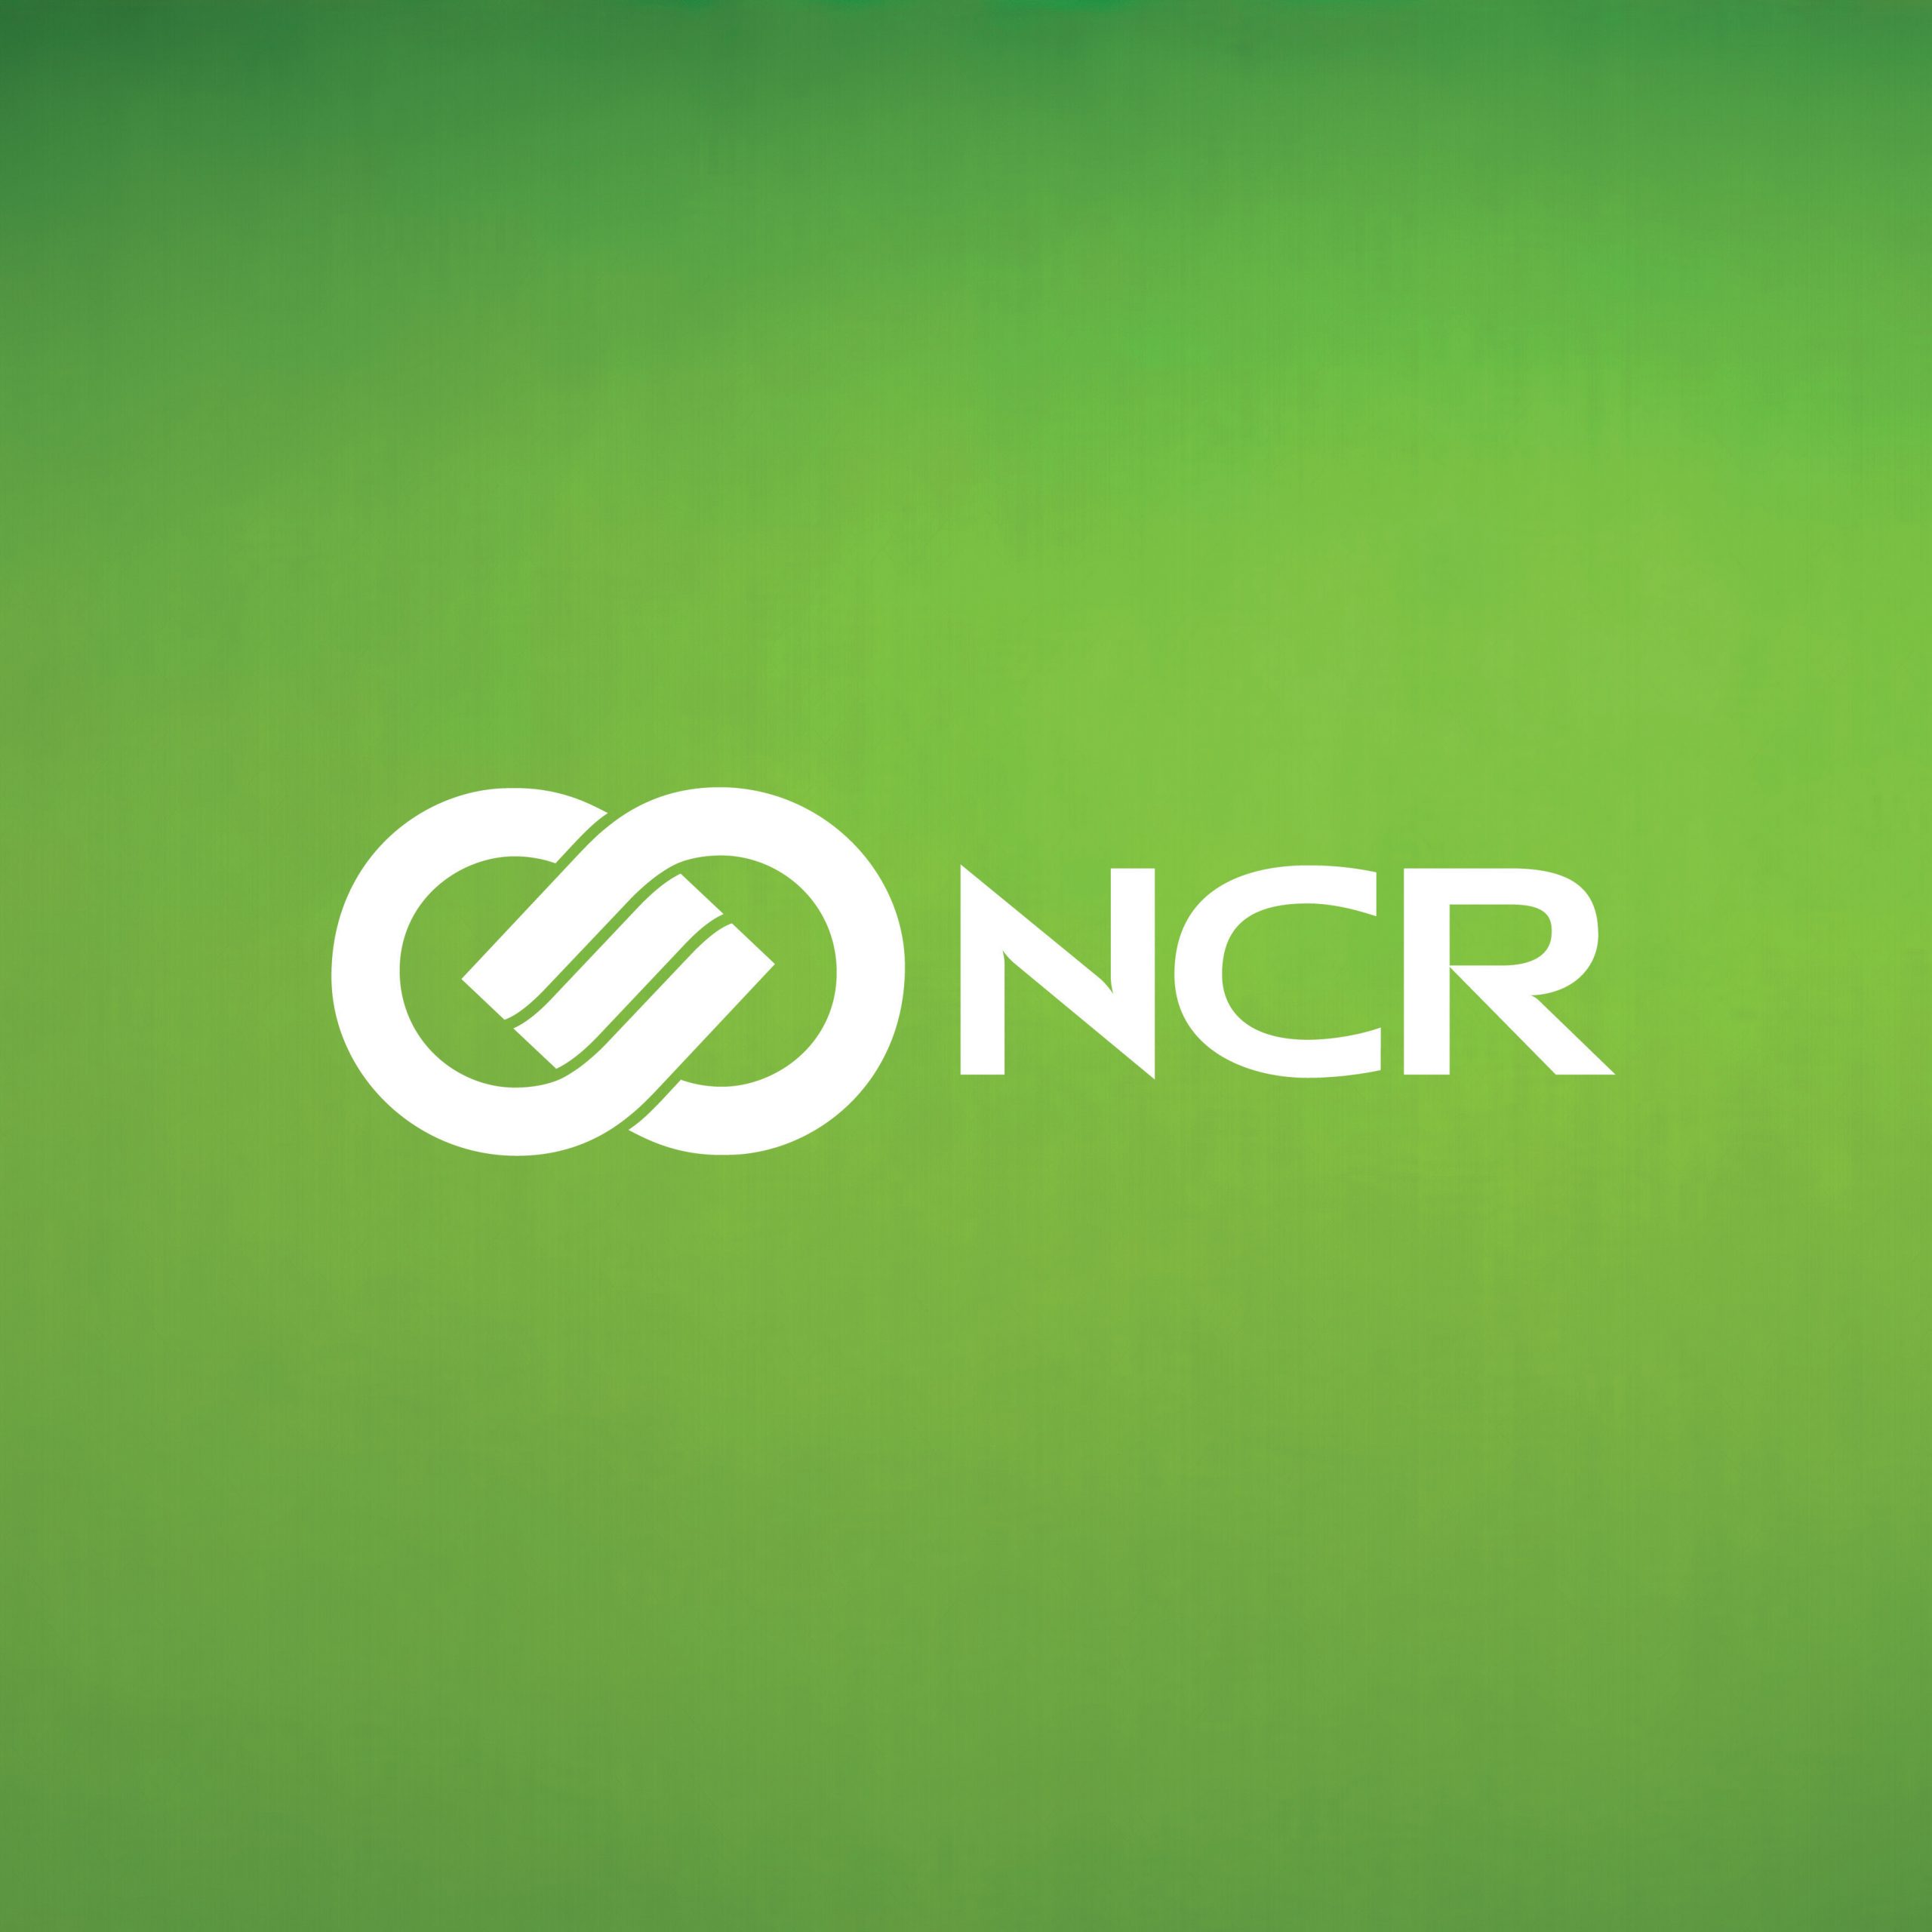 NCRLogo - Call Center in Nigeria